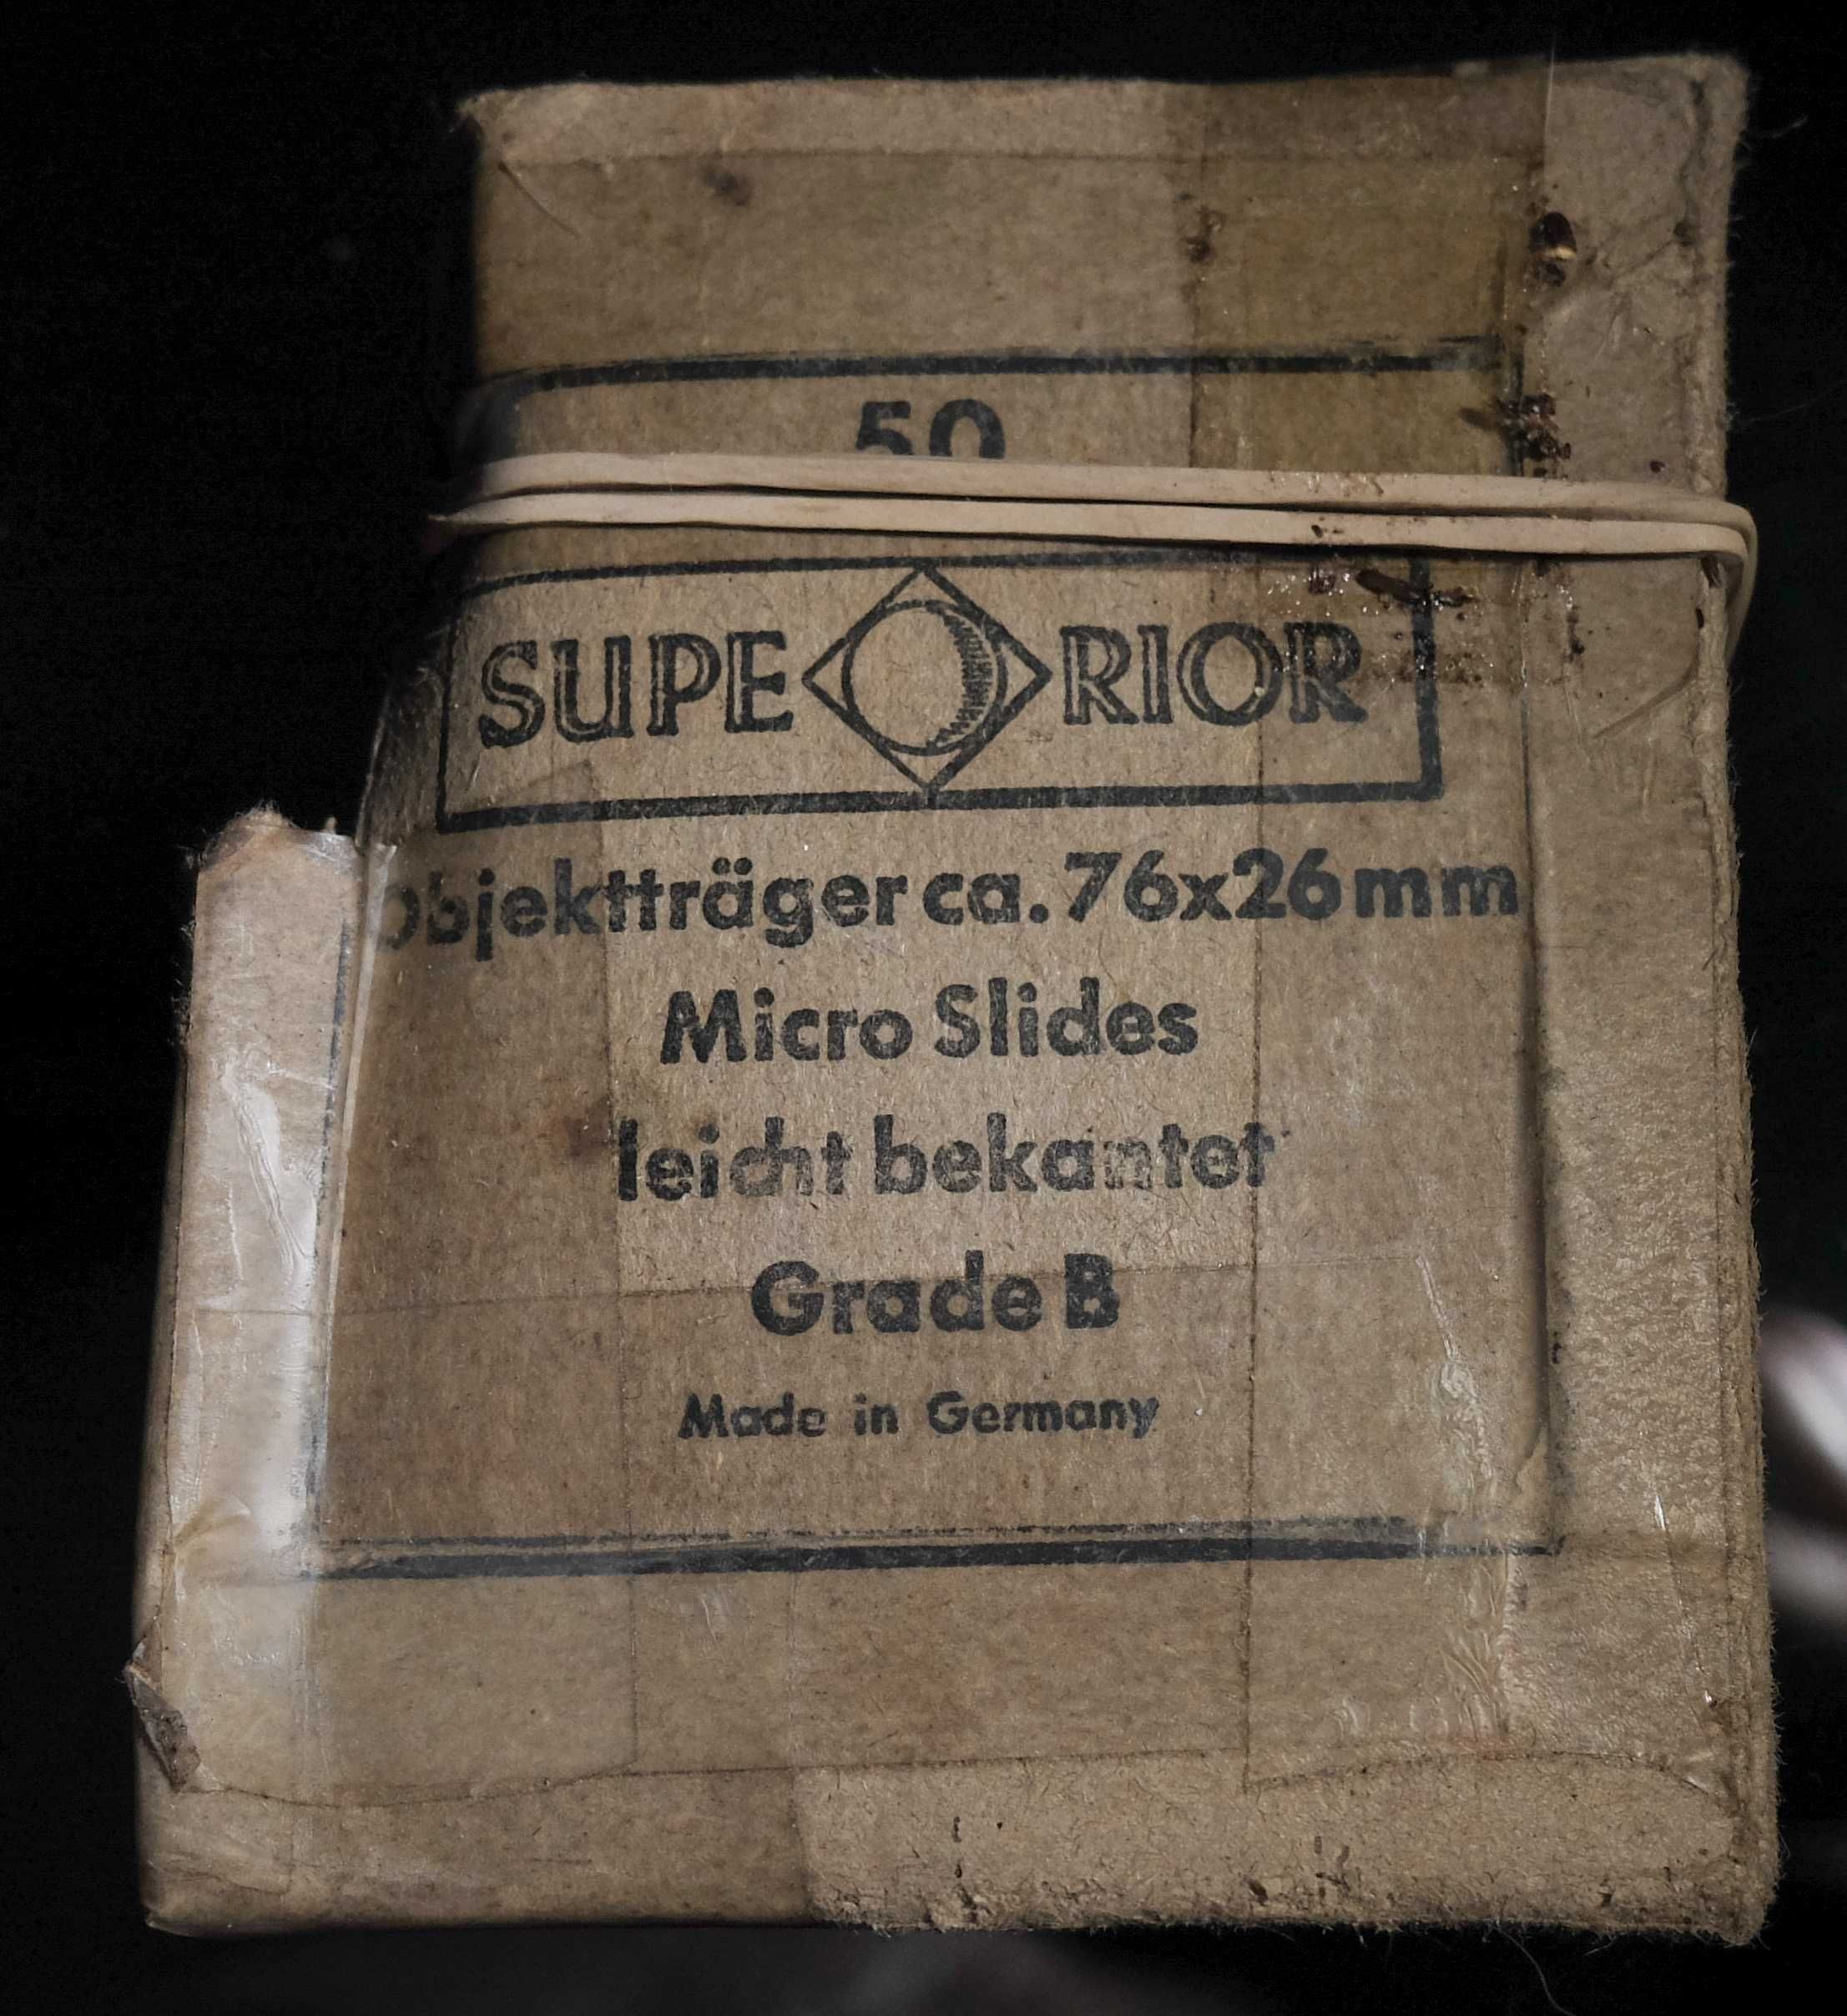 50 Slides para Microscópio - Made in Germany - Grade B - 76x26mm